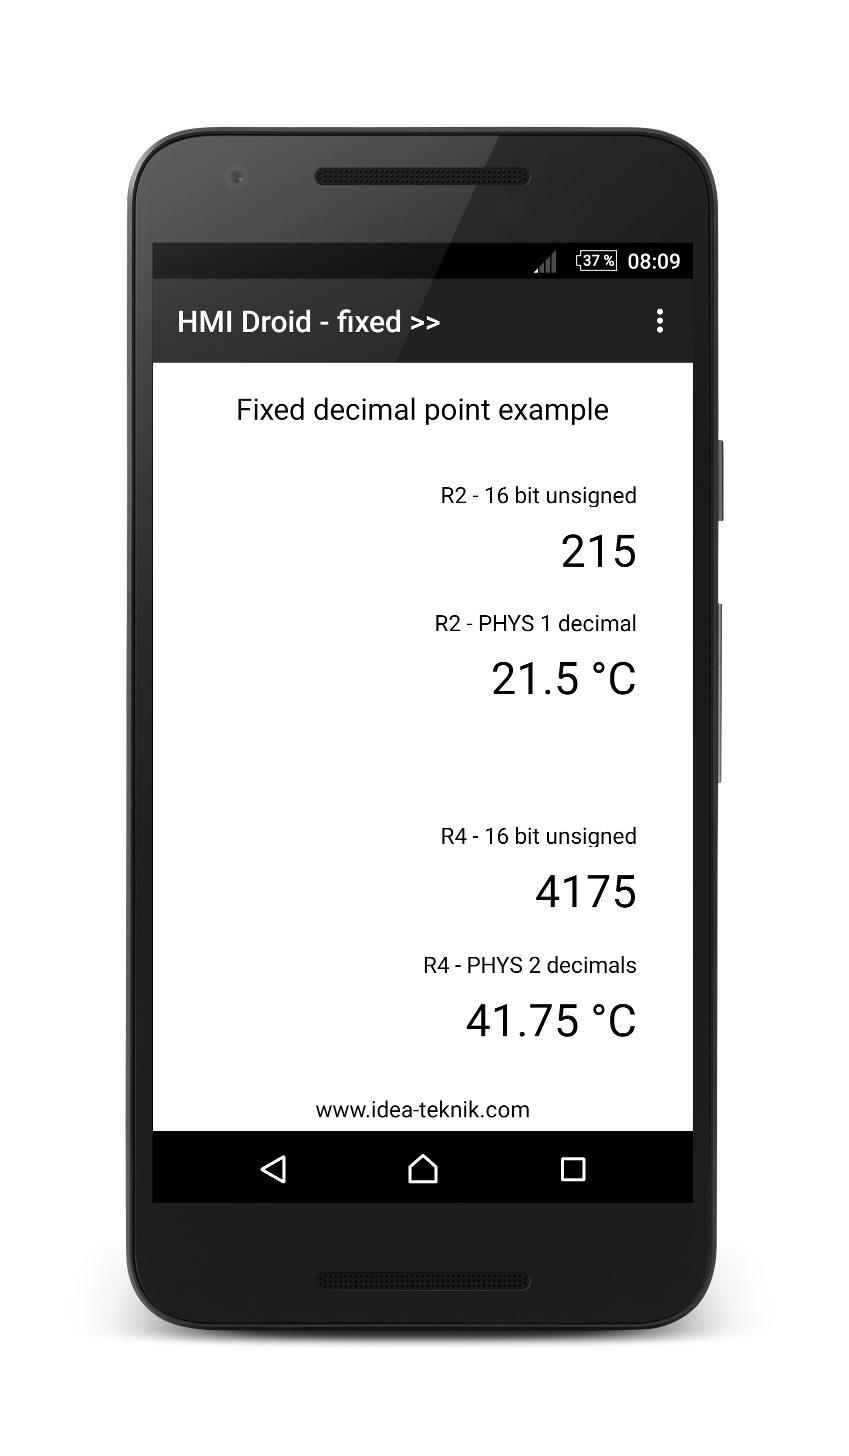 HMI Droid - fixed decimal point